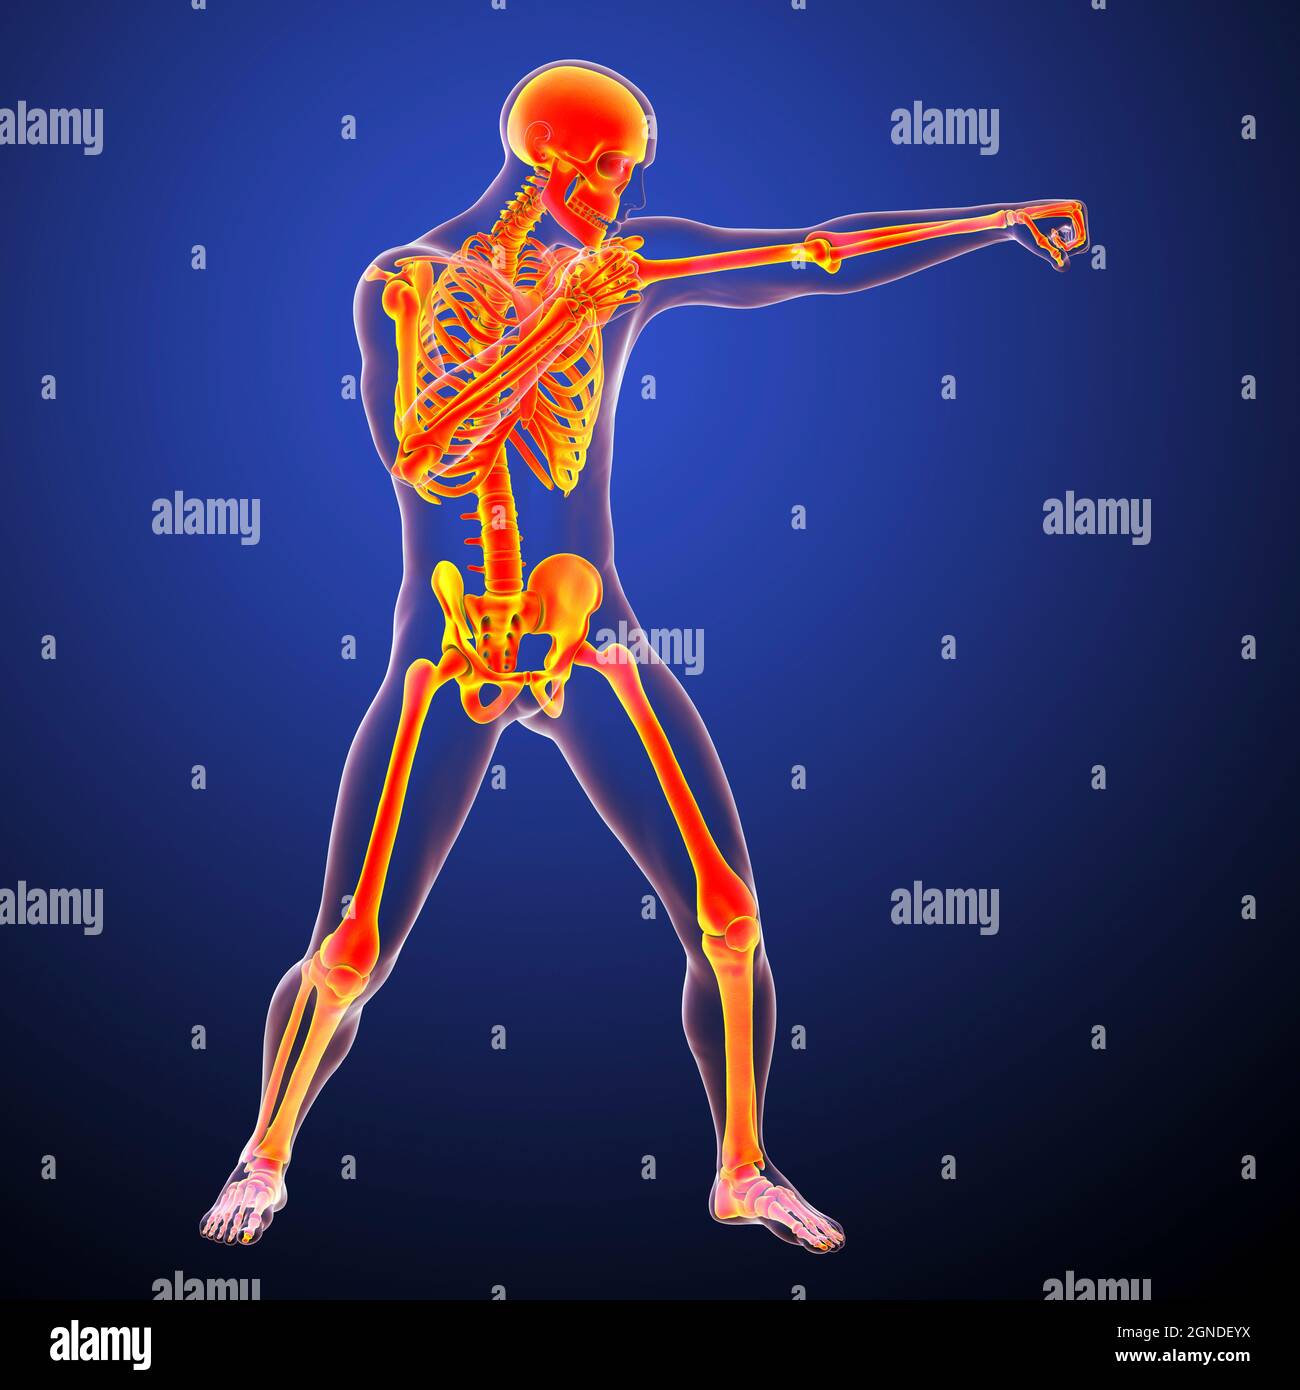 Anatomy of a boxer, illustration Stock Photo - Alamy